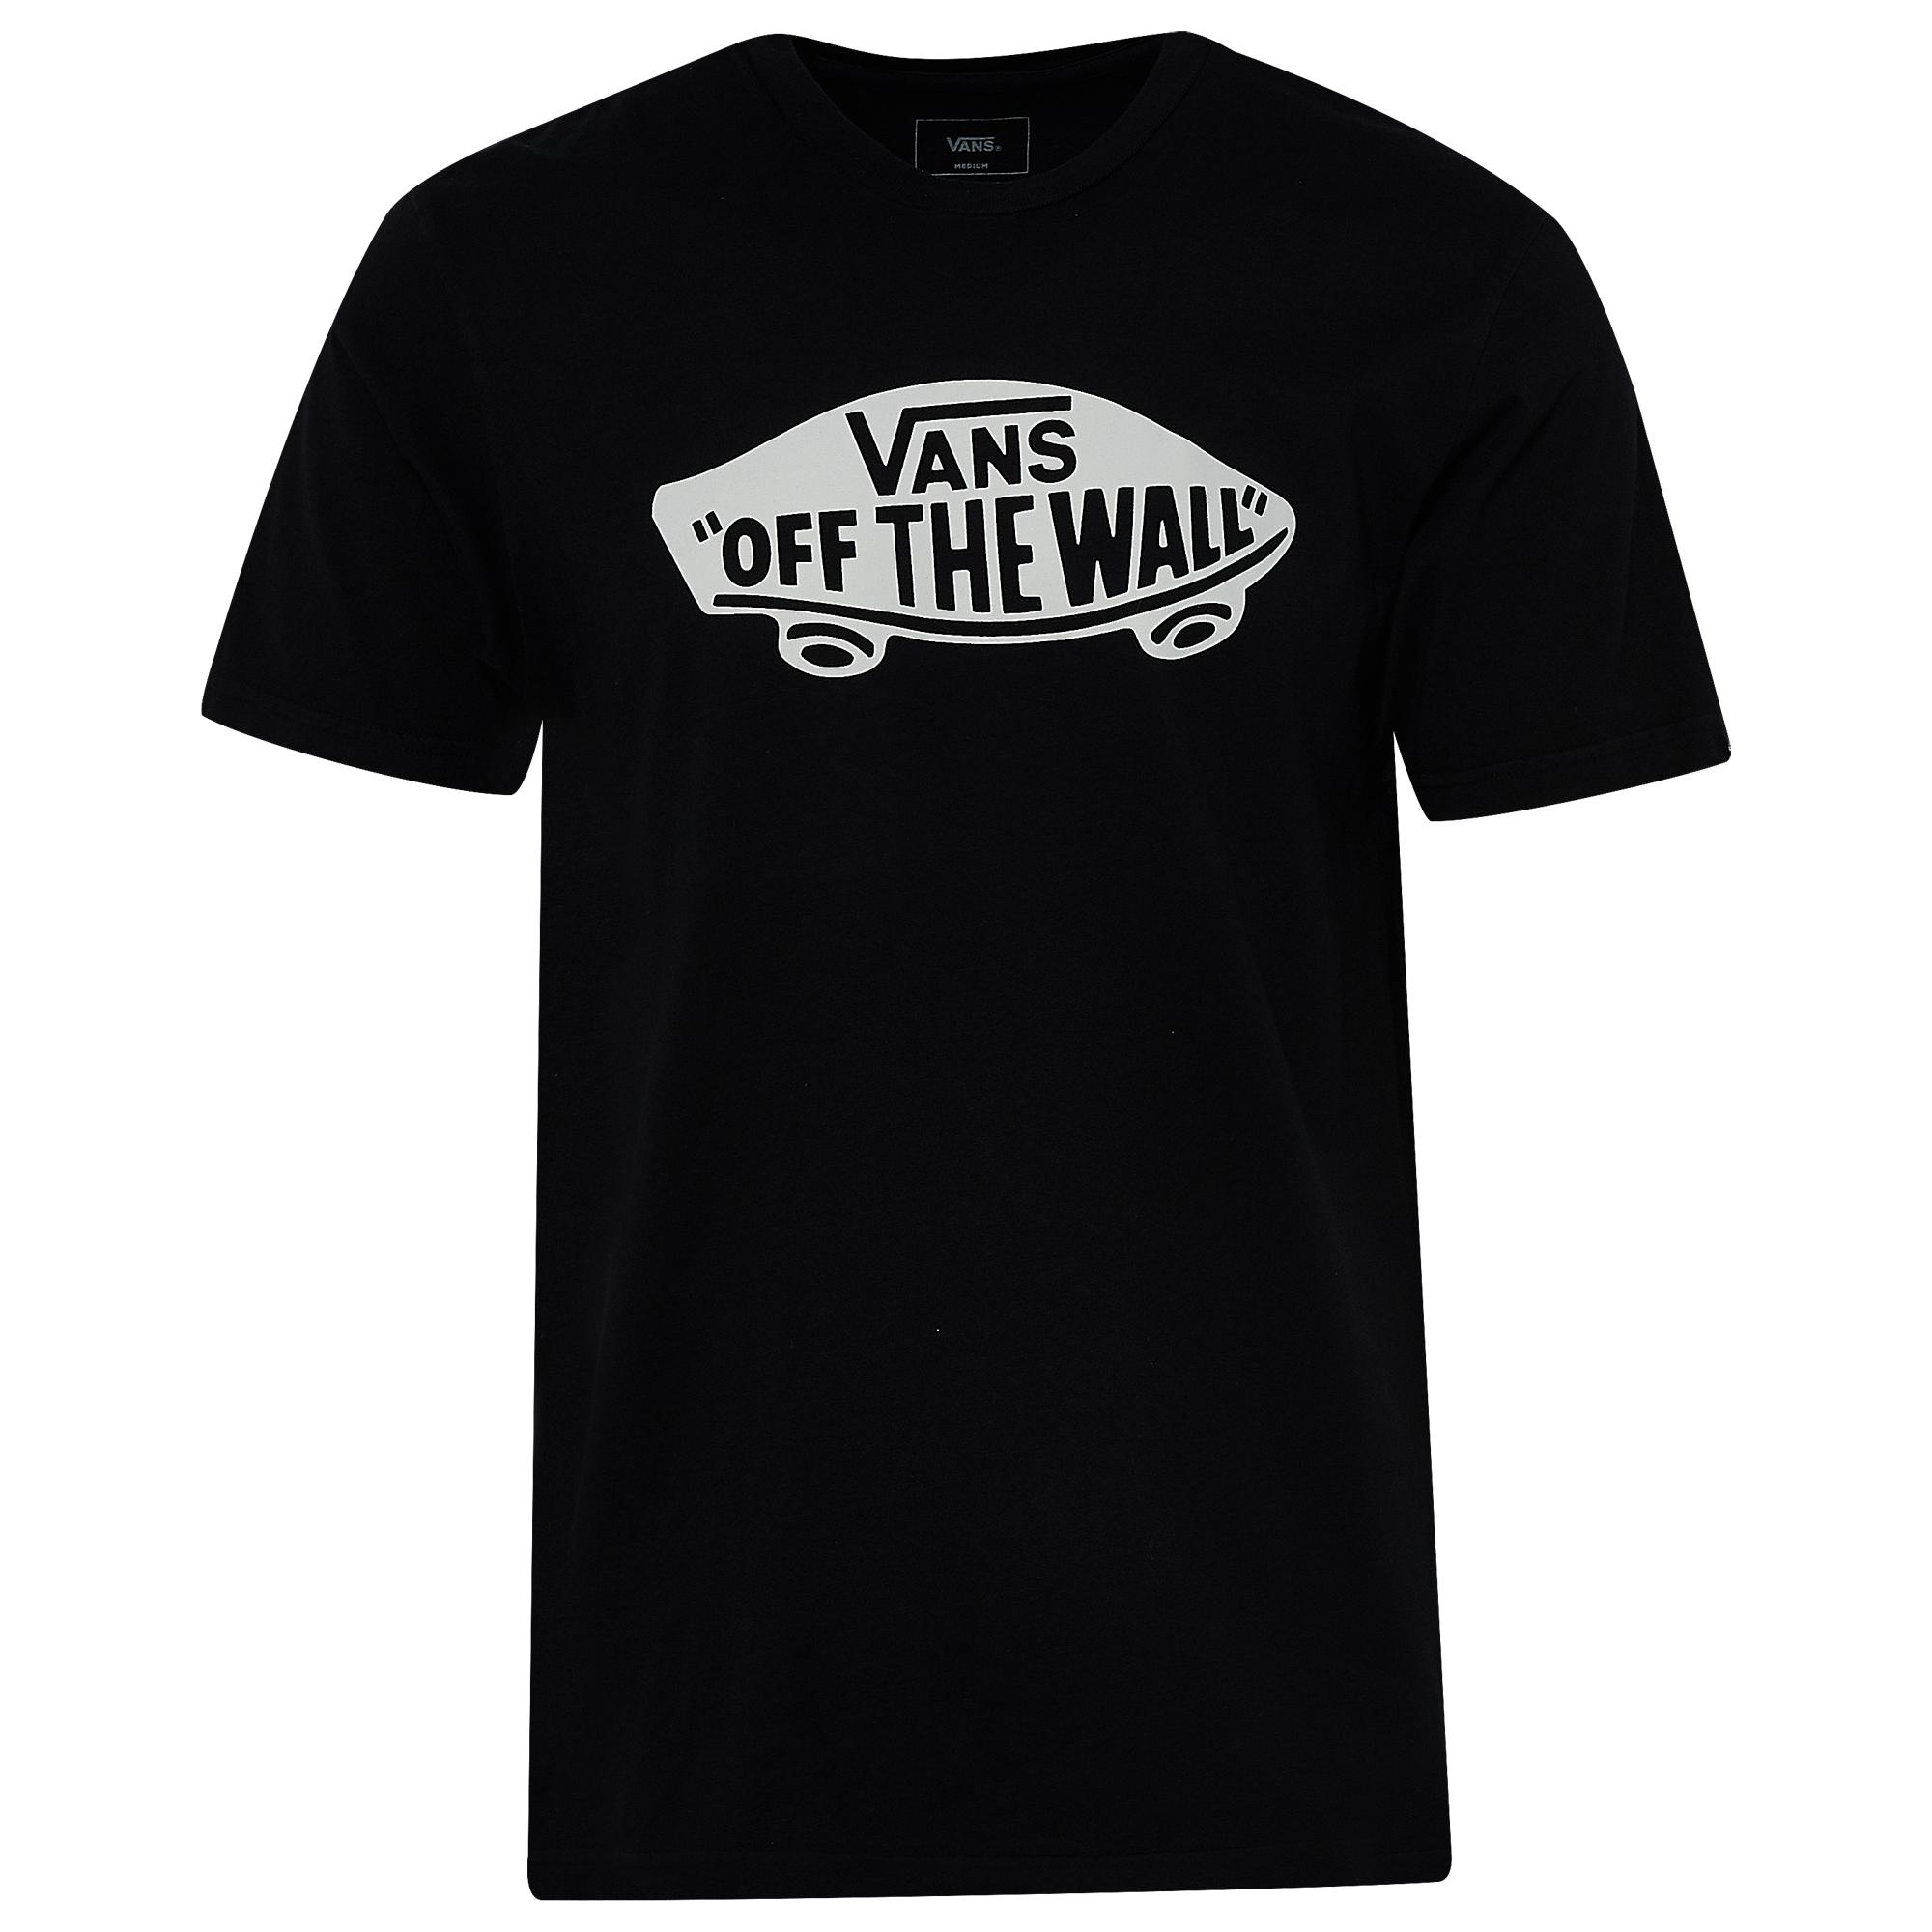 vans off the wall shirts